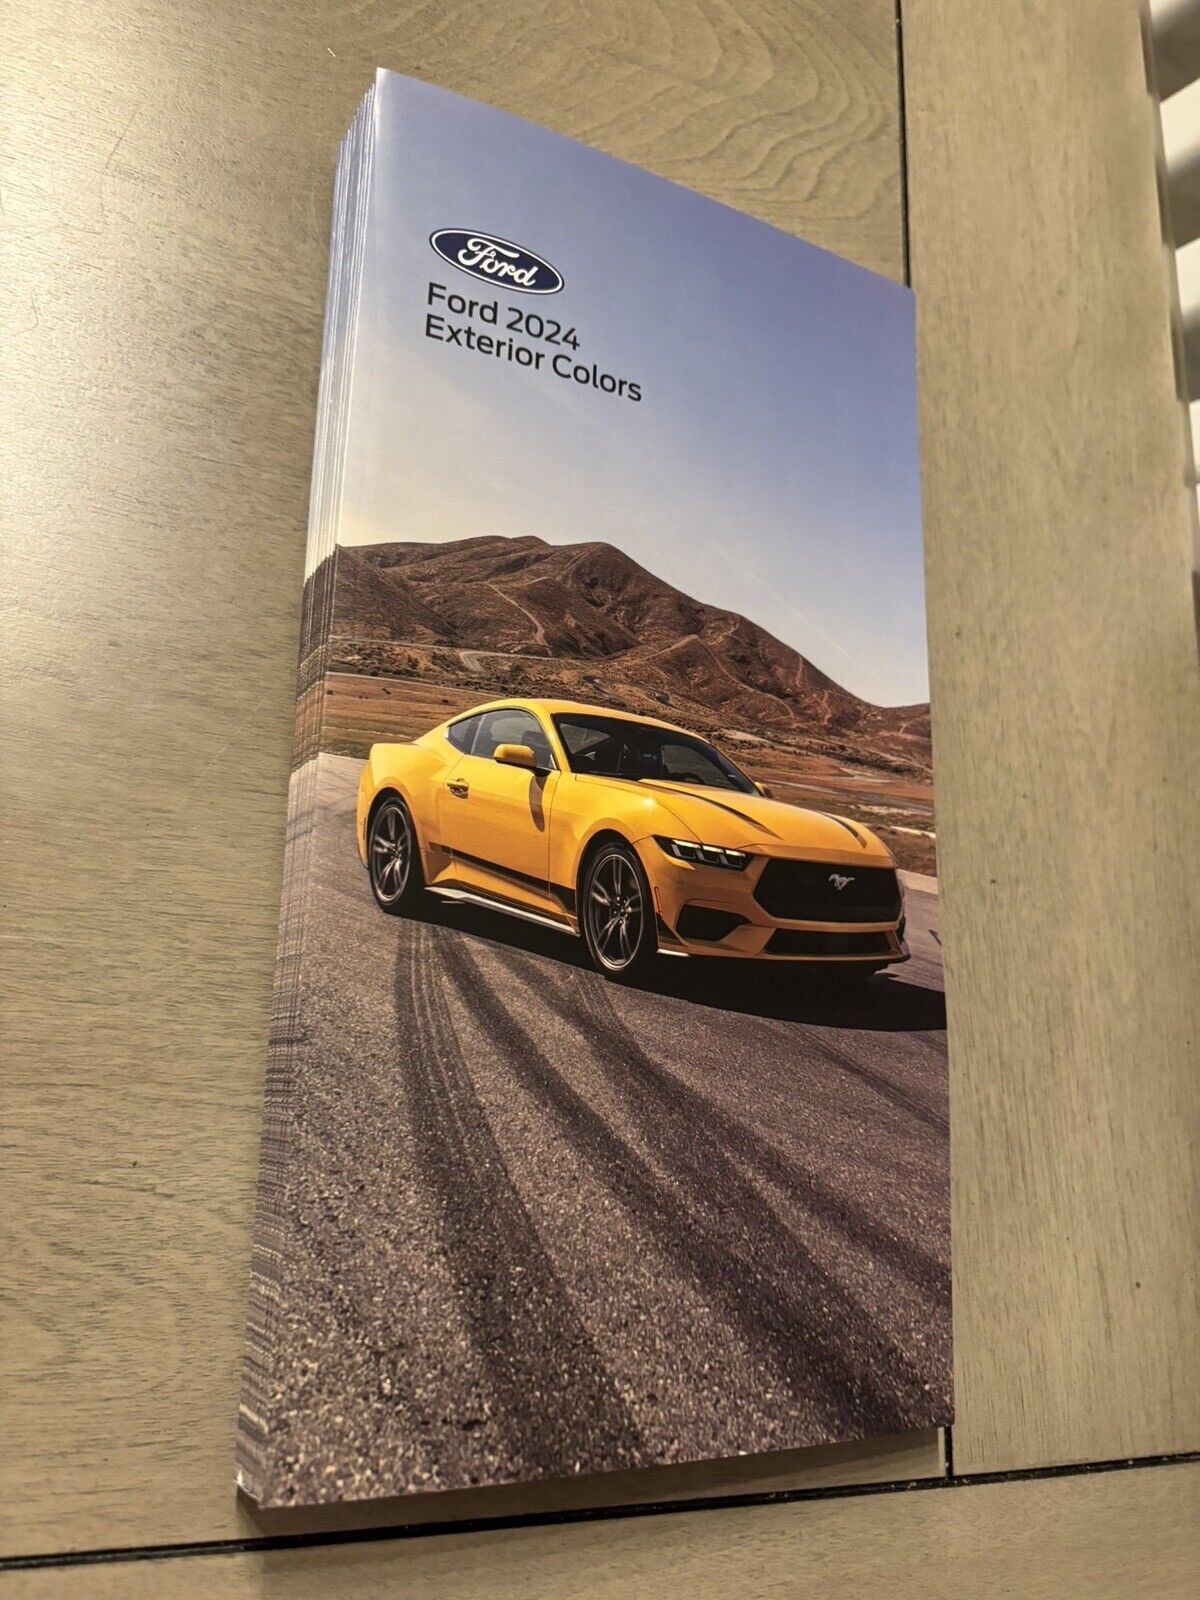 2024 FORD CARS TRUCKS EXTERIOR COLORS 4-page Original Dealer Brochure